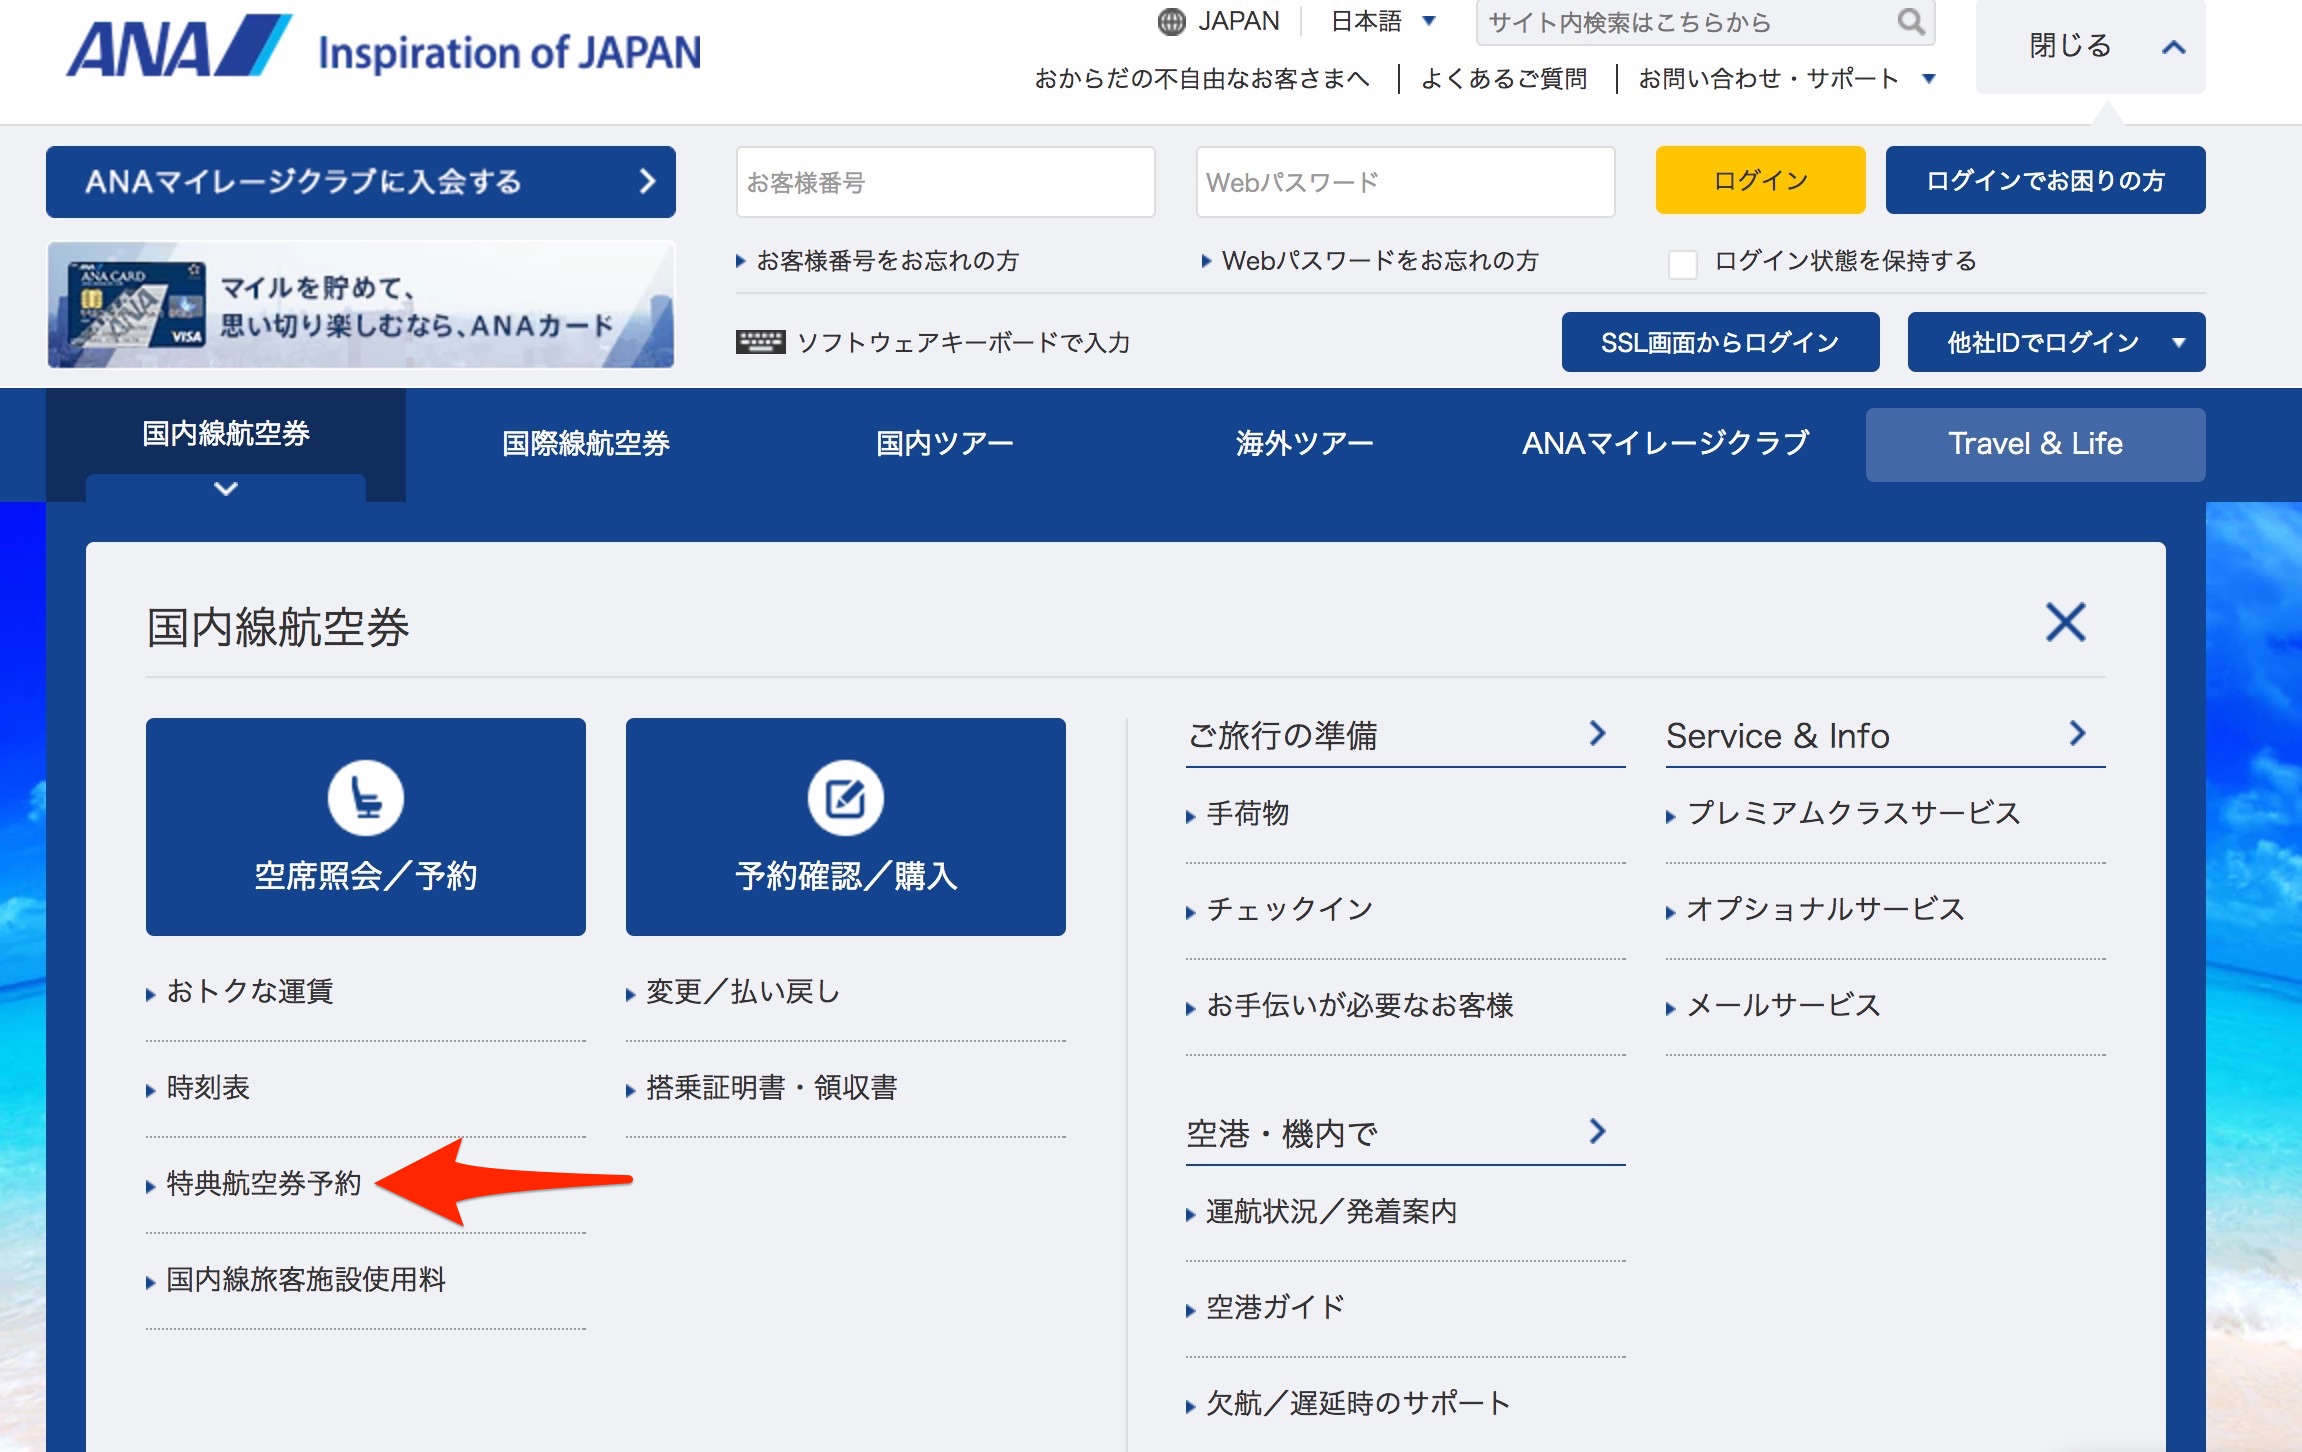 ANAホームページ・国内線特典航空券の項目タブ